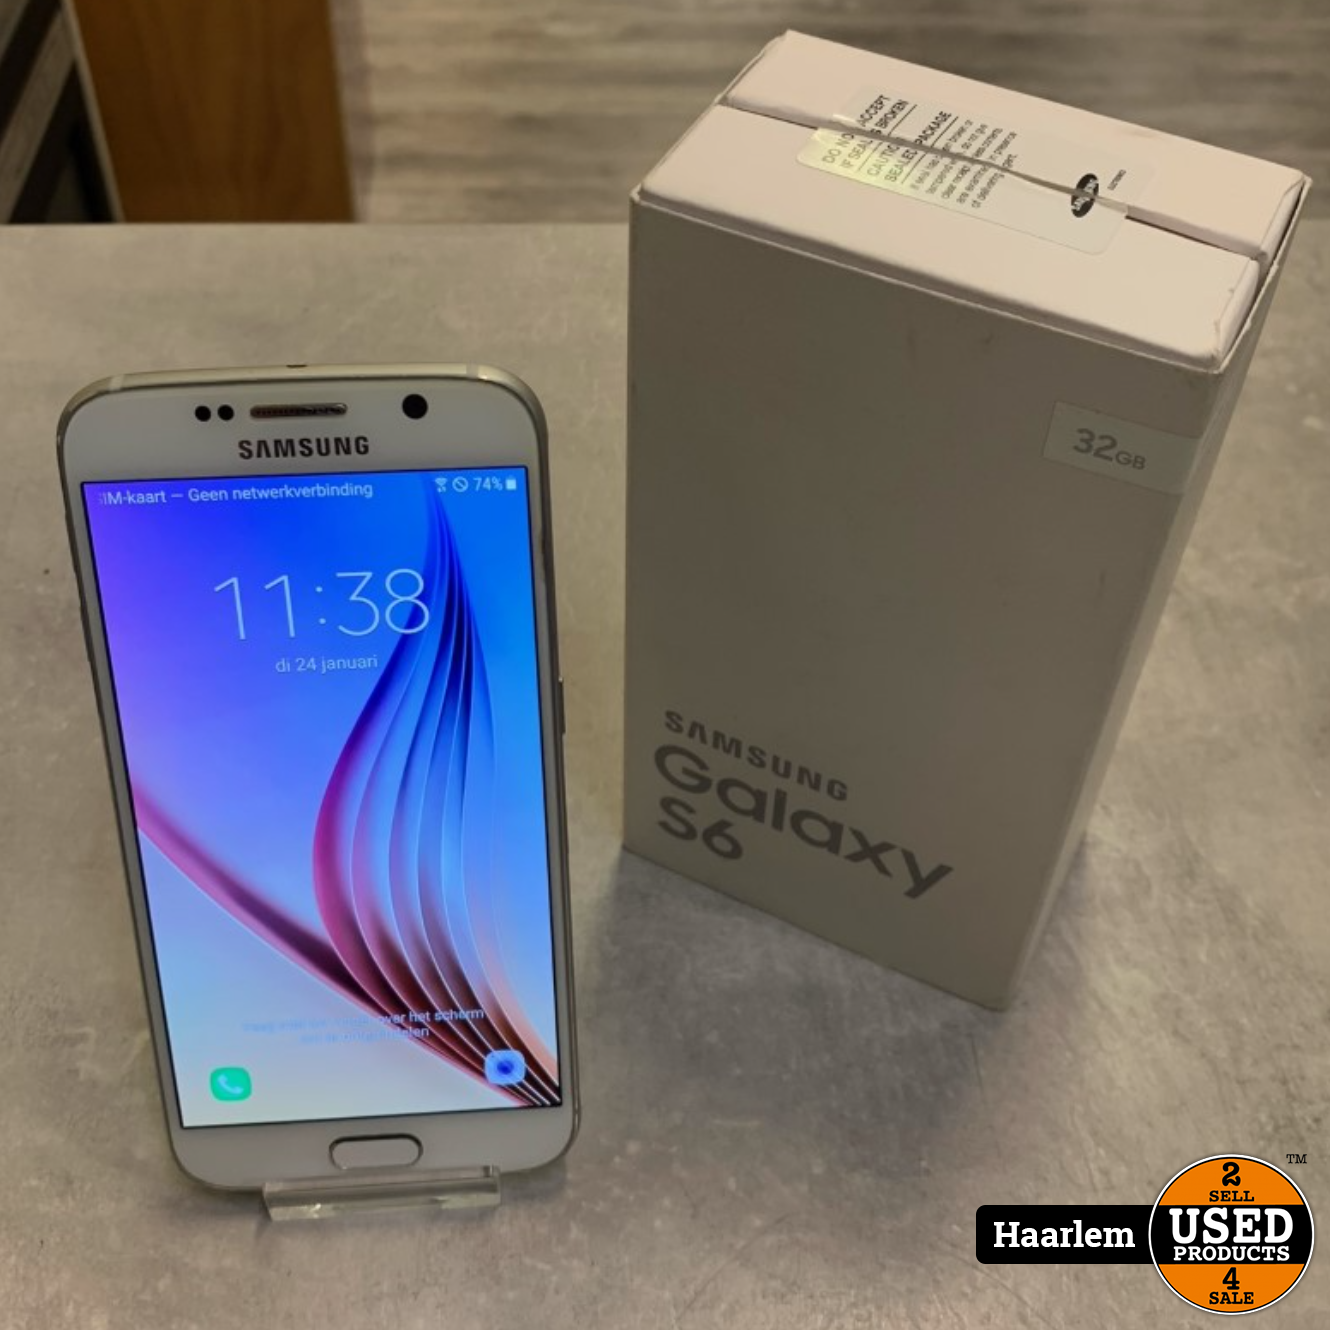 Berouw bolvormig resultaat Samsung Galaxy S6 32gb wit in doos - Used Products Haarlem Cronjéstraat